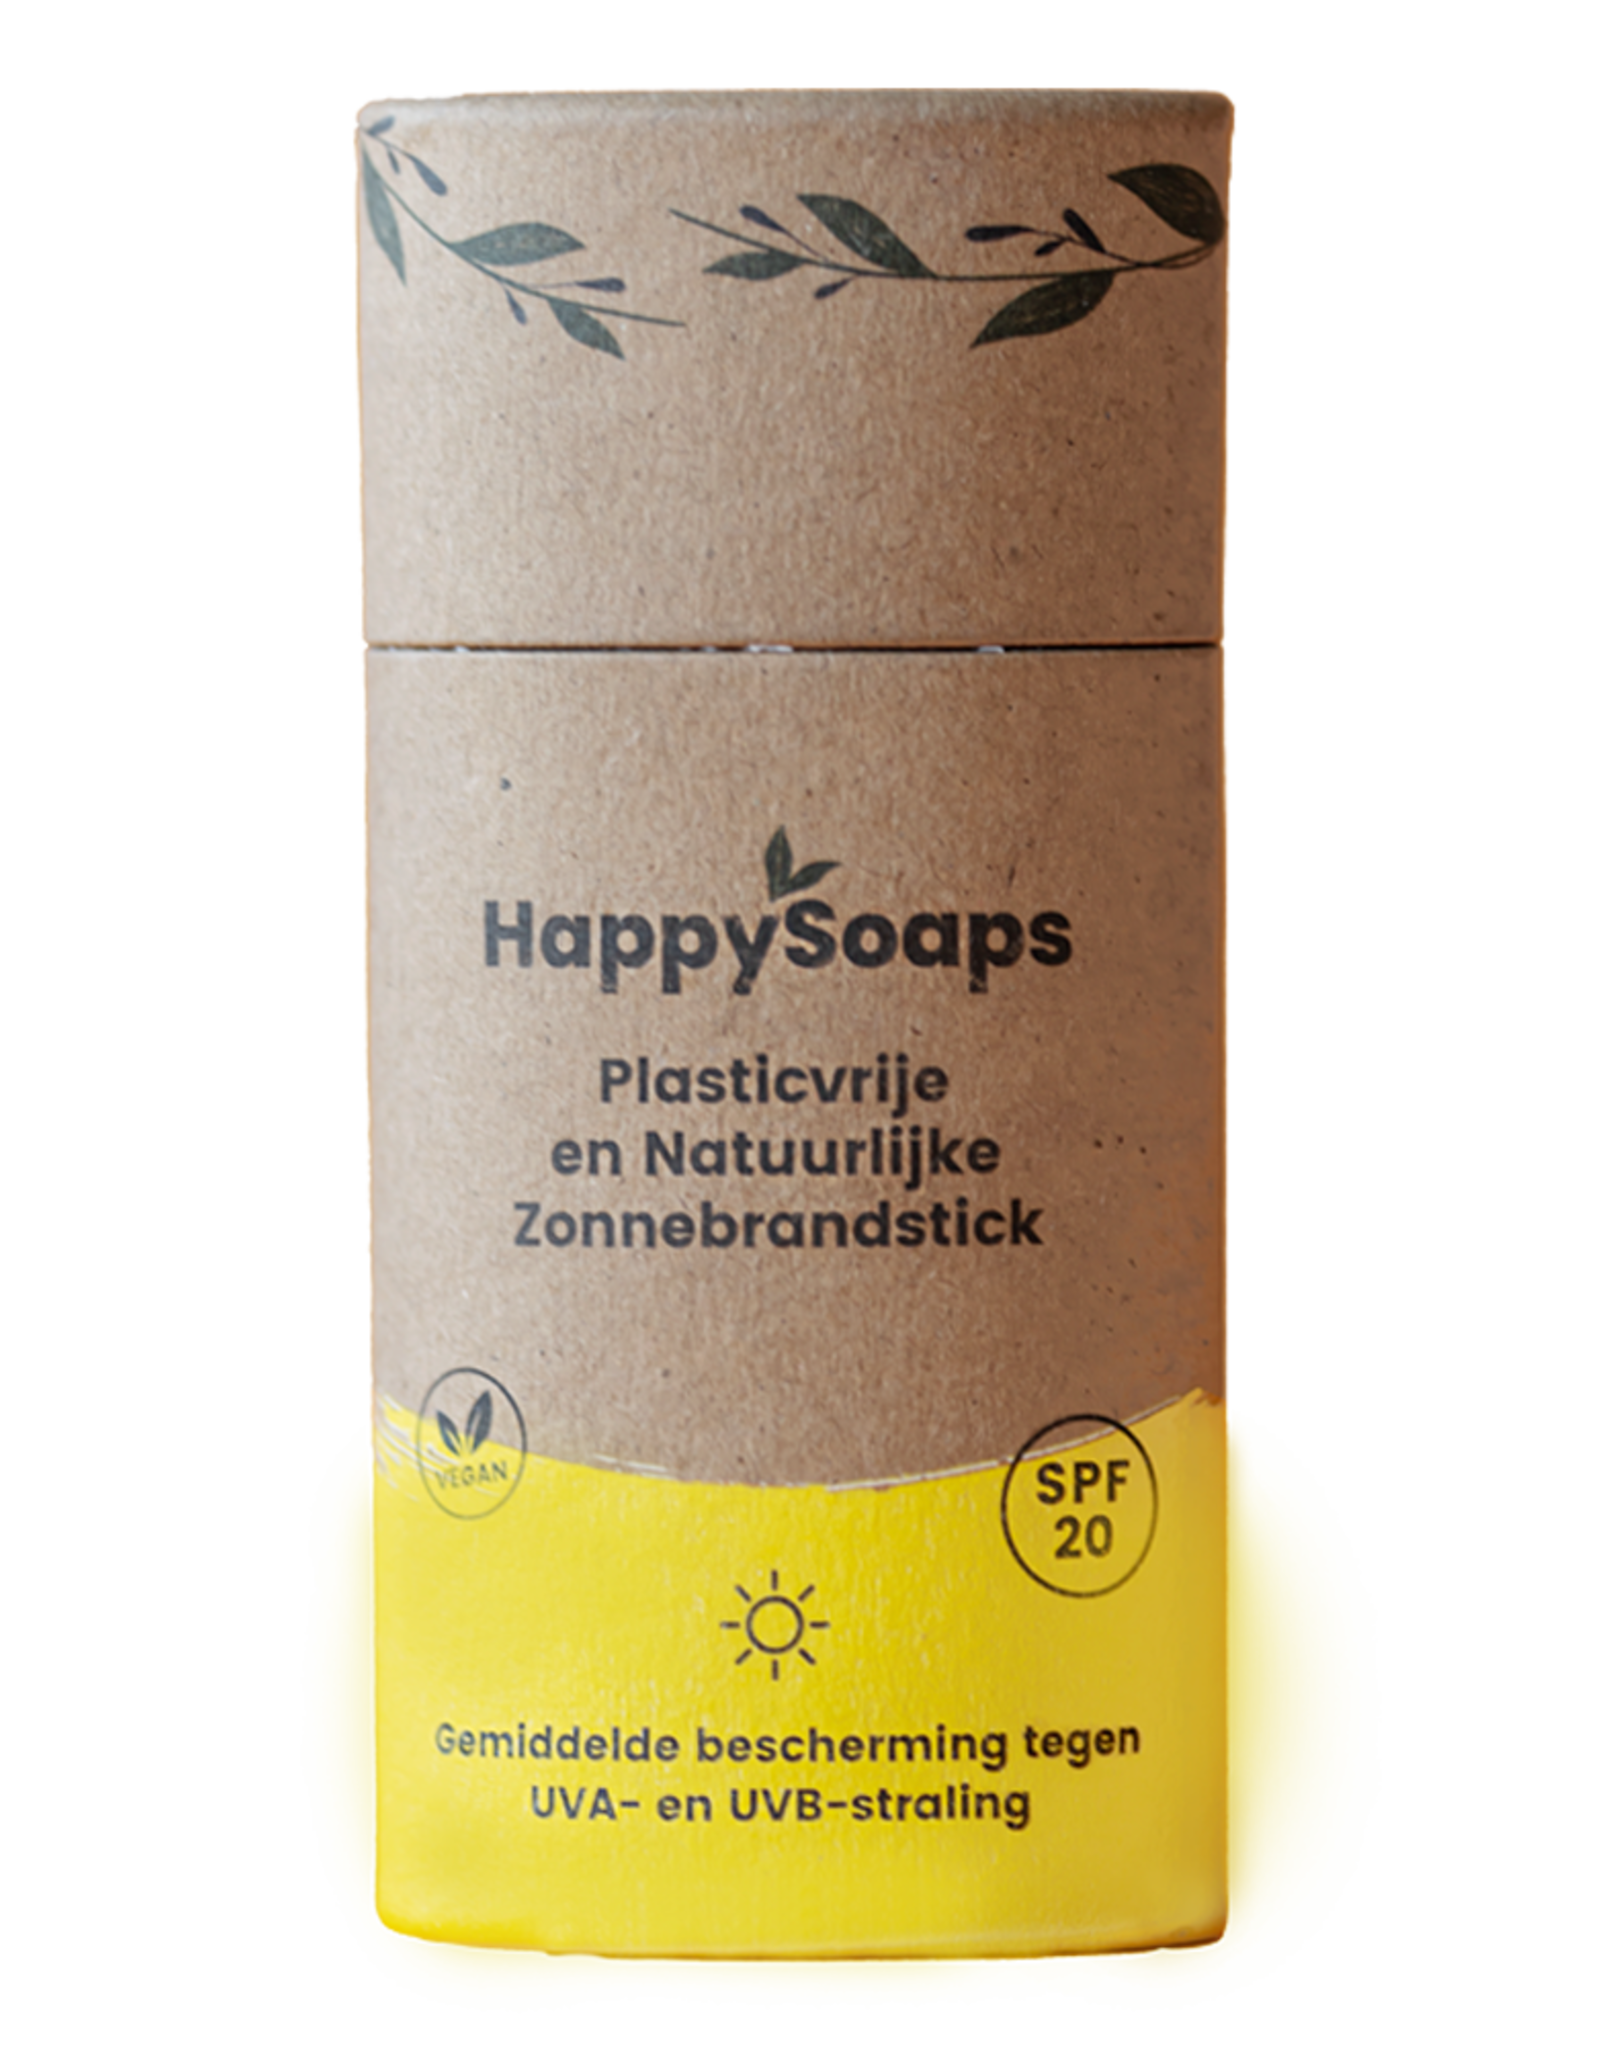 HappySoaps Zonnebrandstick SPF 20 - HappySoaps